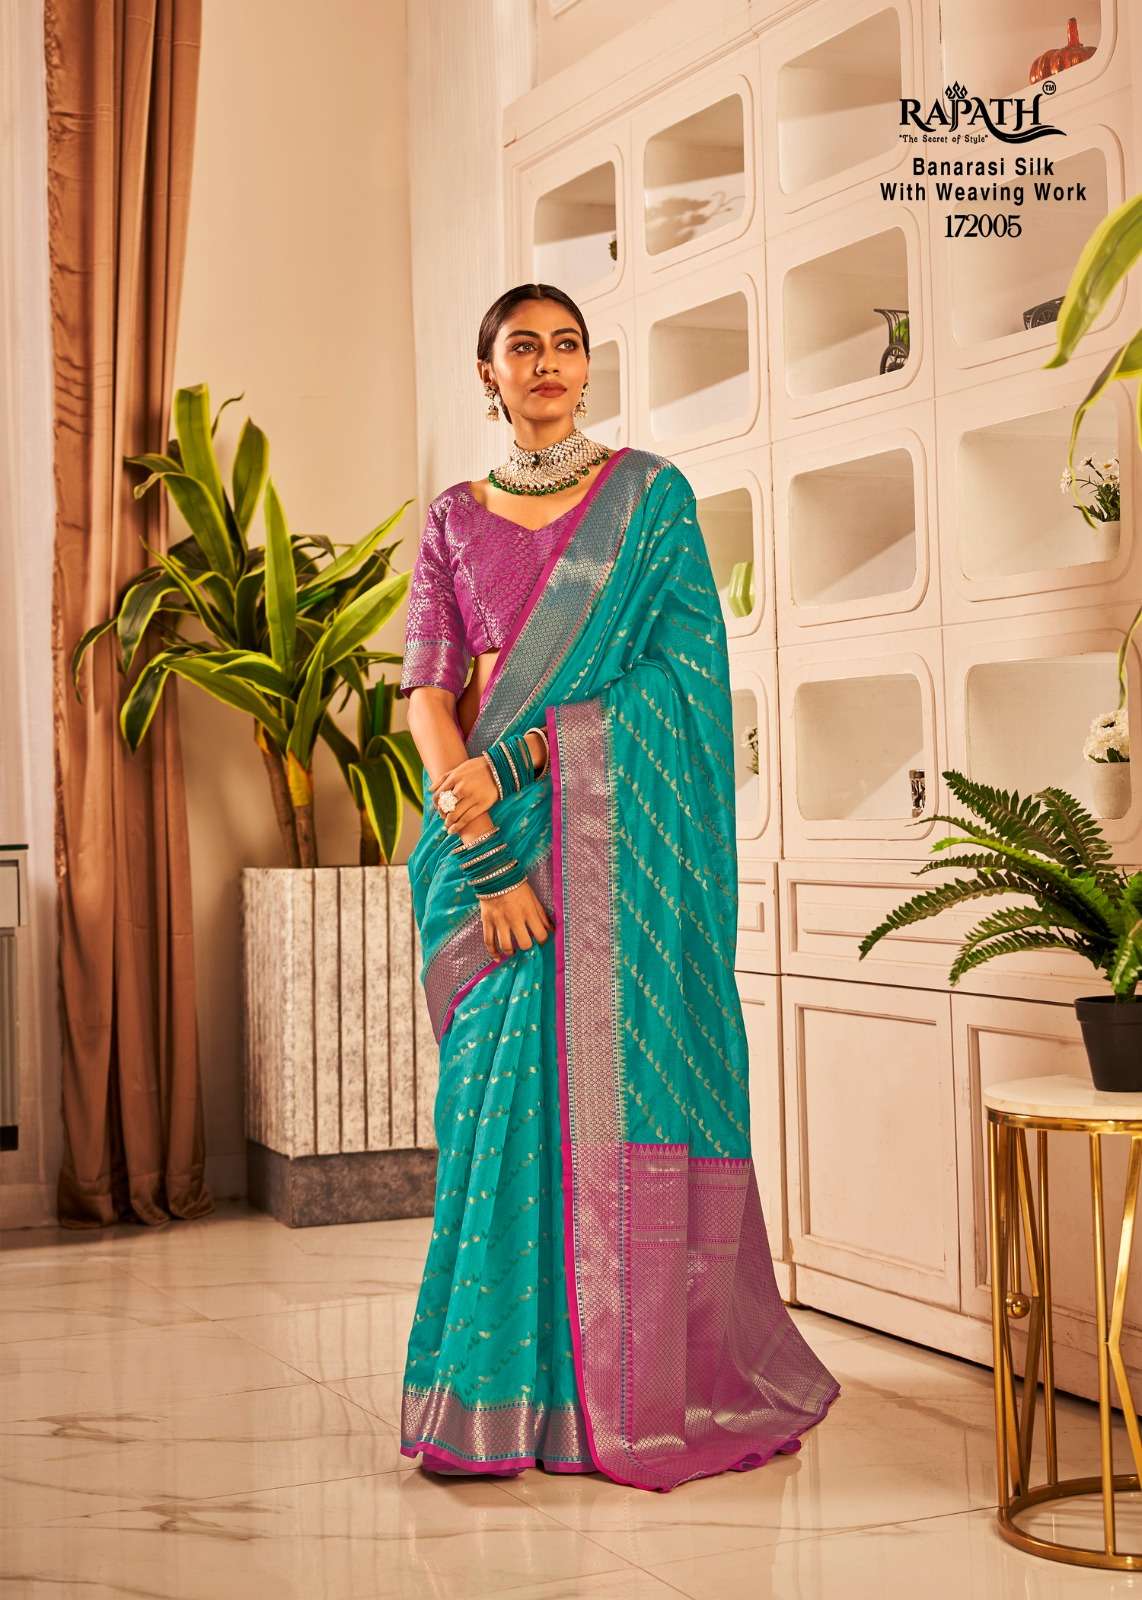 vaijati silk by rajpath banarasi wedding saree supplier